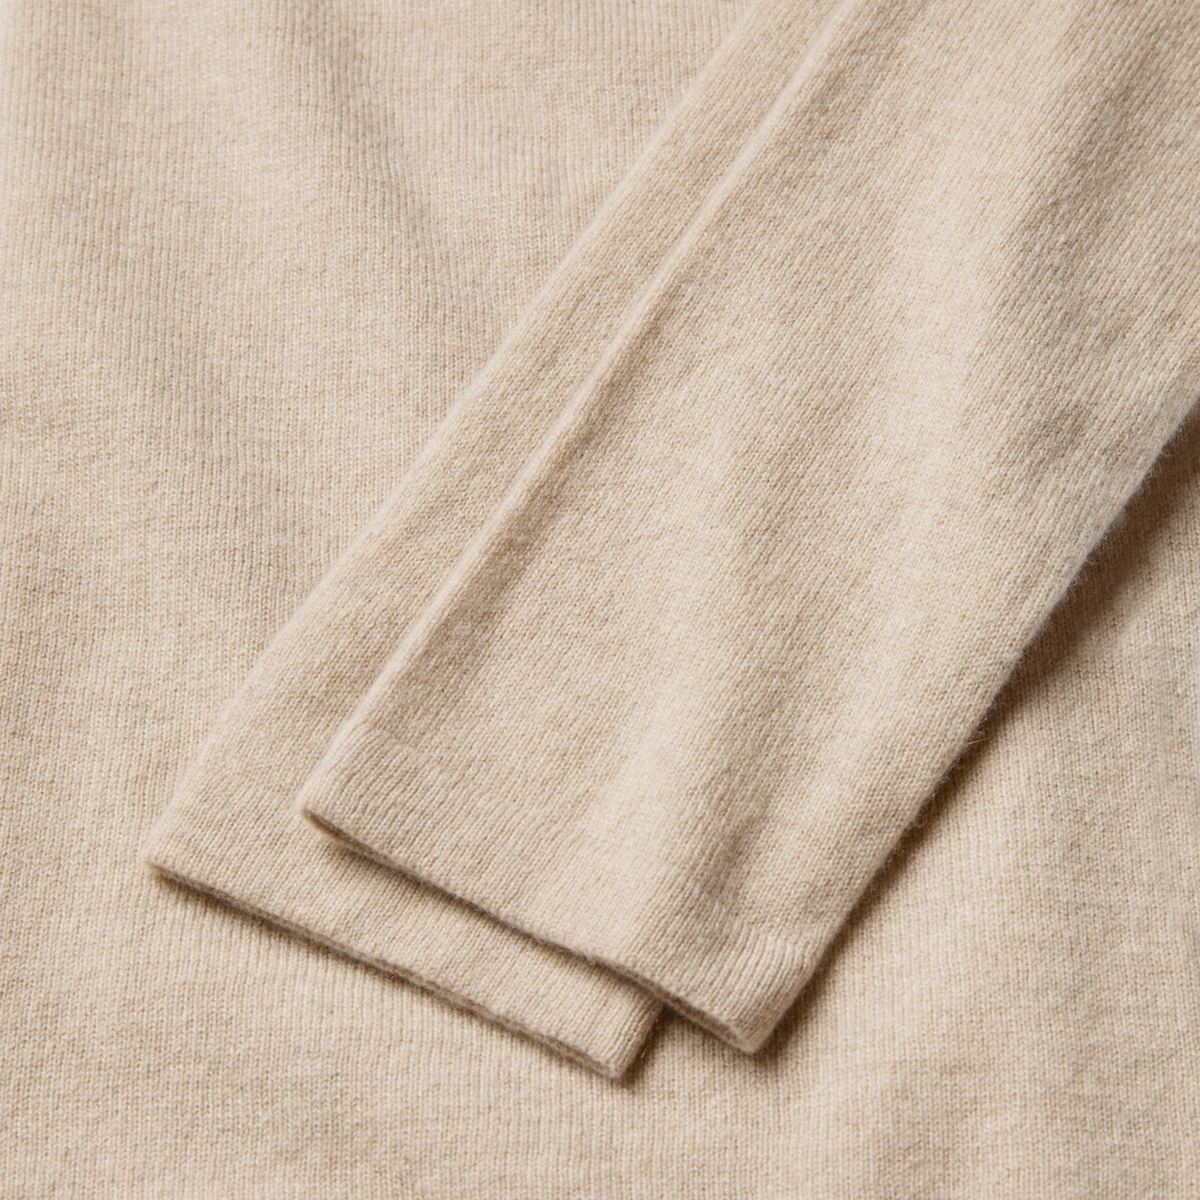 Sleeves Closeup of Tan Sferra Intimita Long Sleeve Top